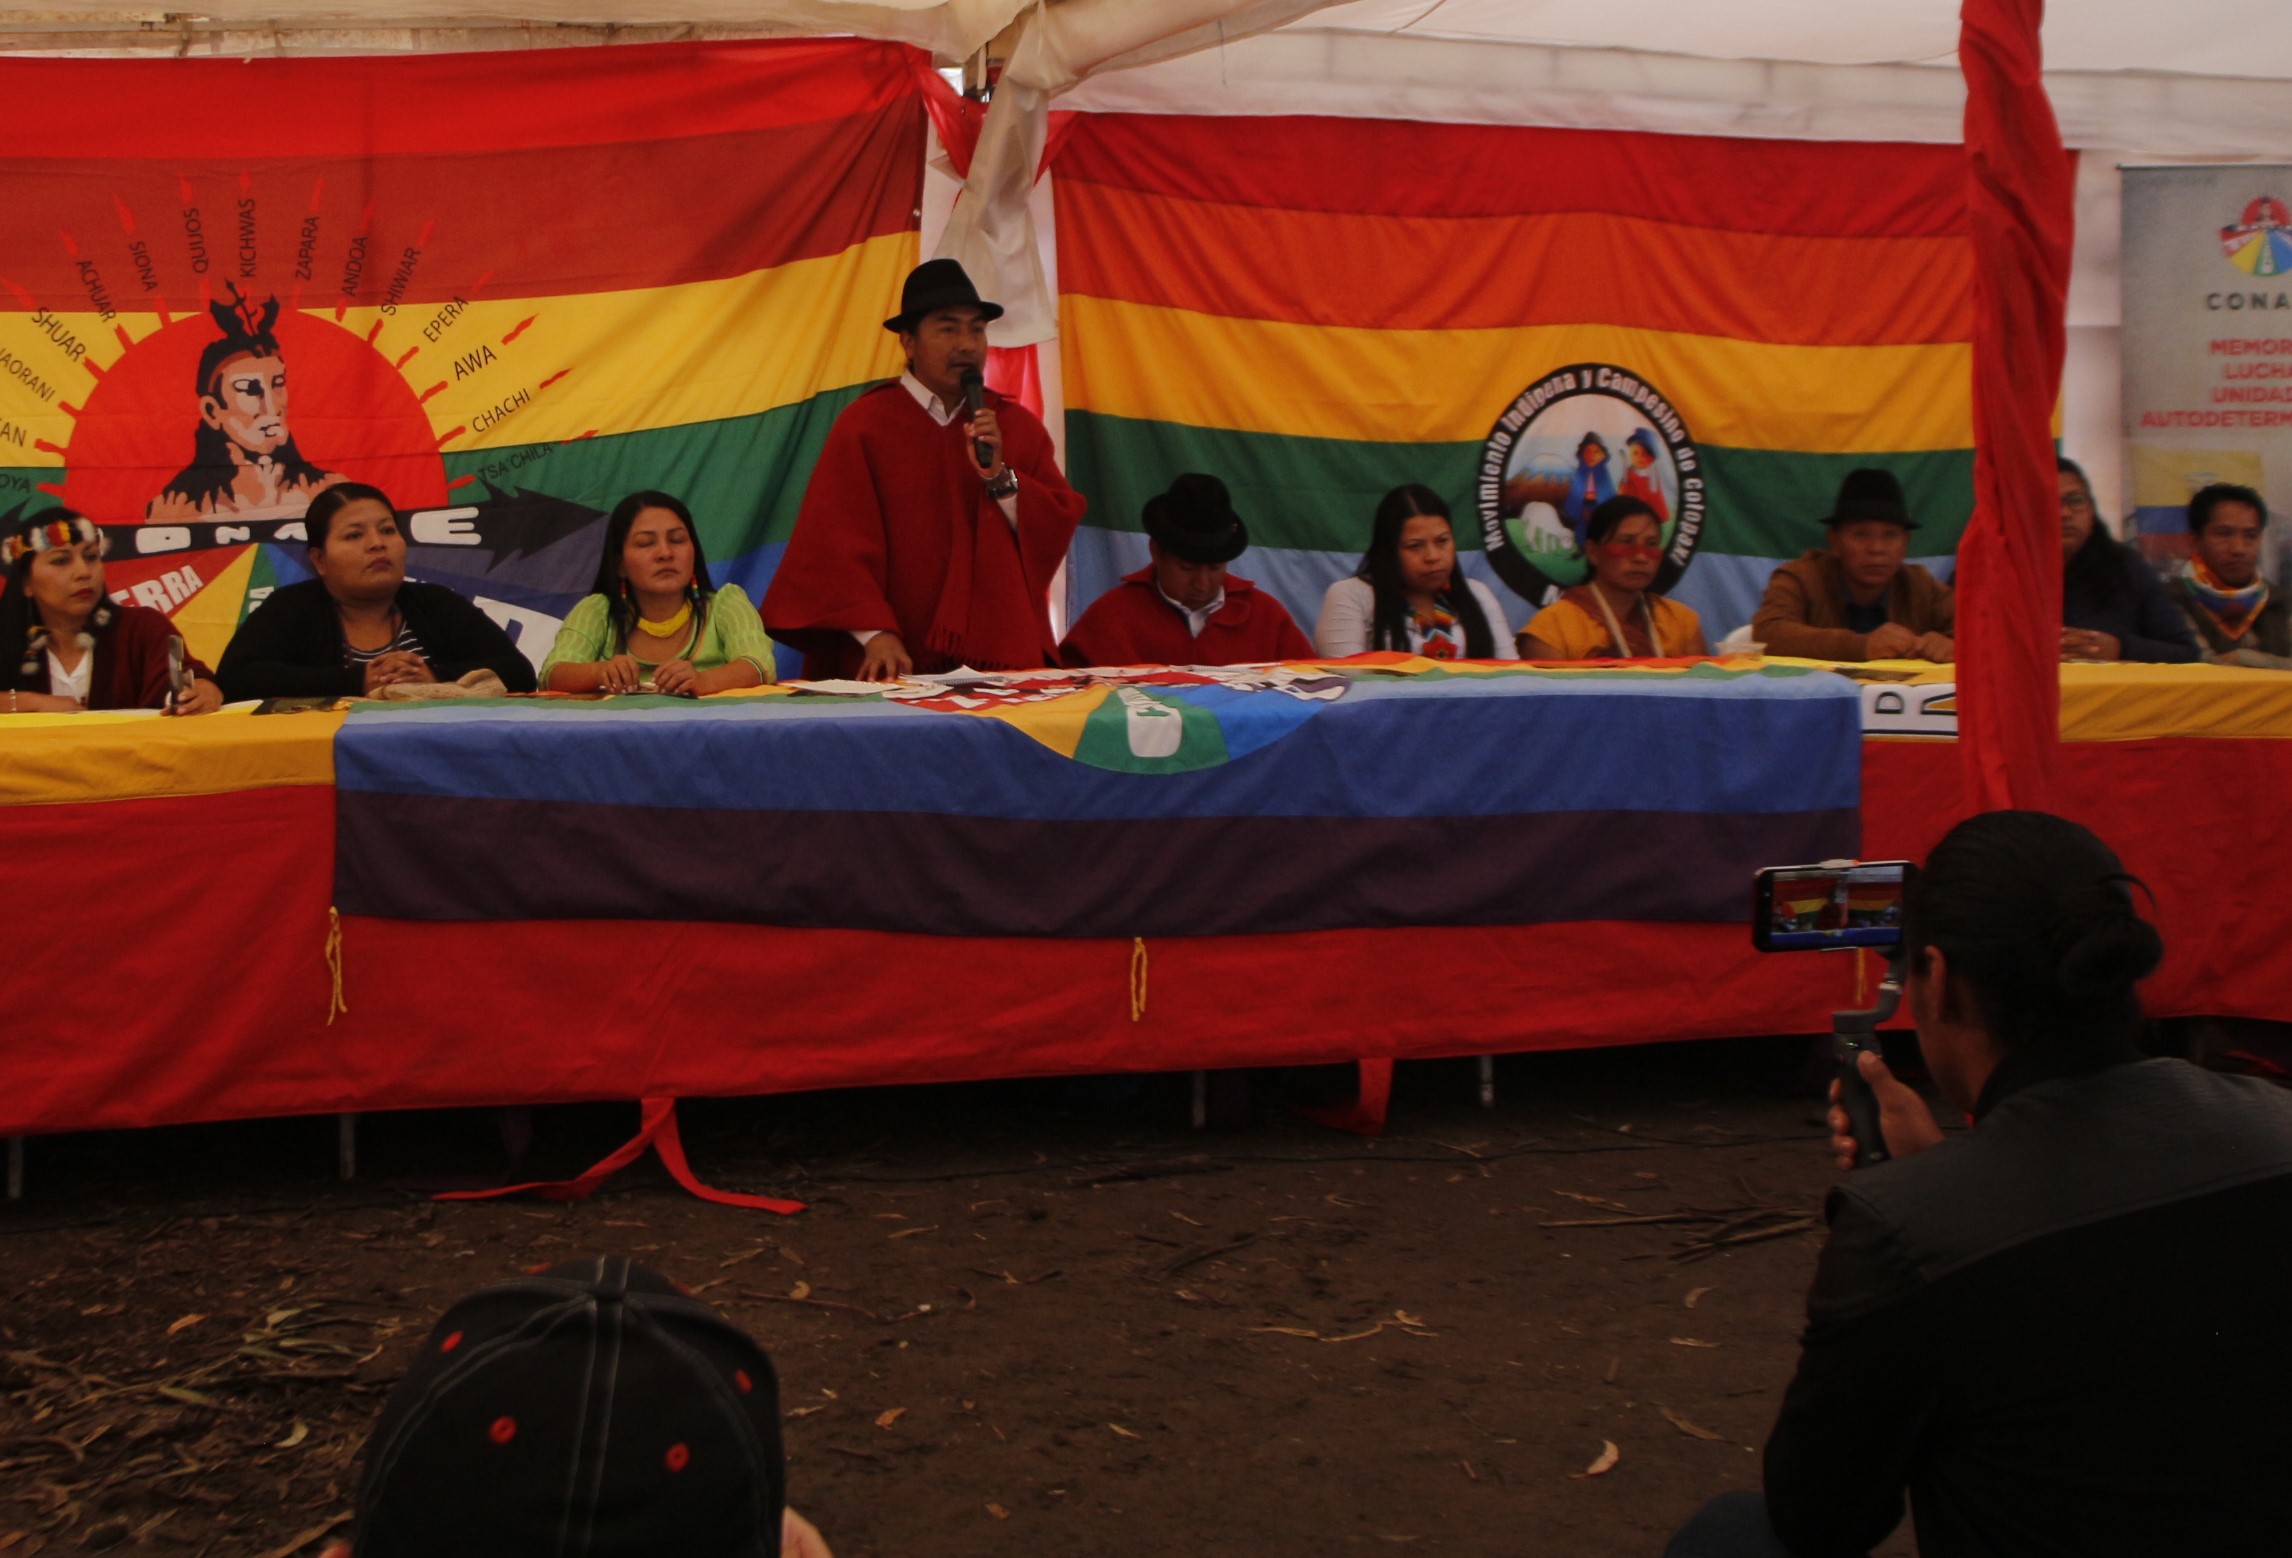 ASAMBLEA Conaie convocó a sus bases y a sus regionales en Latacunga